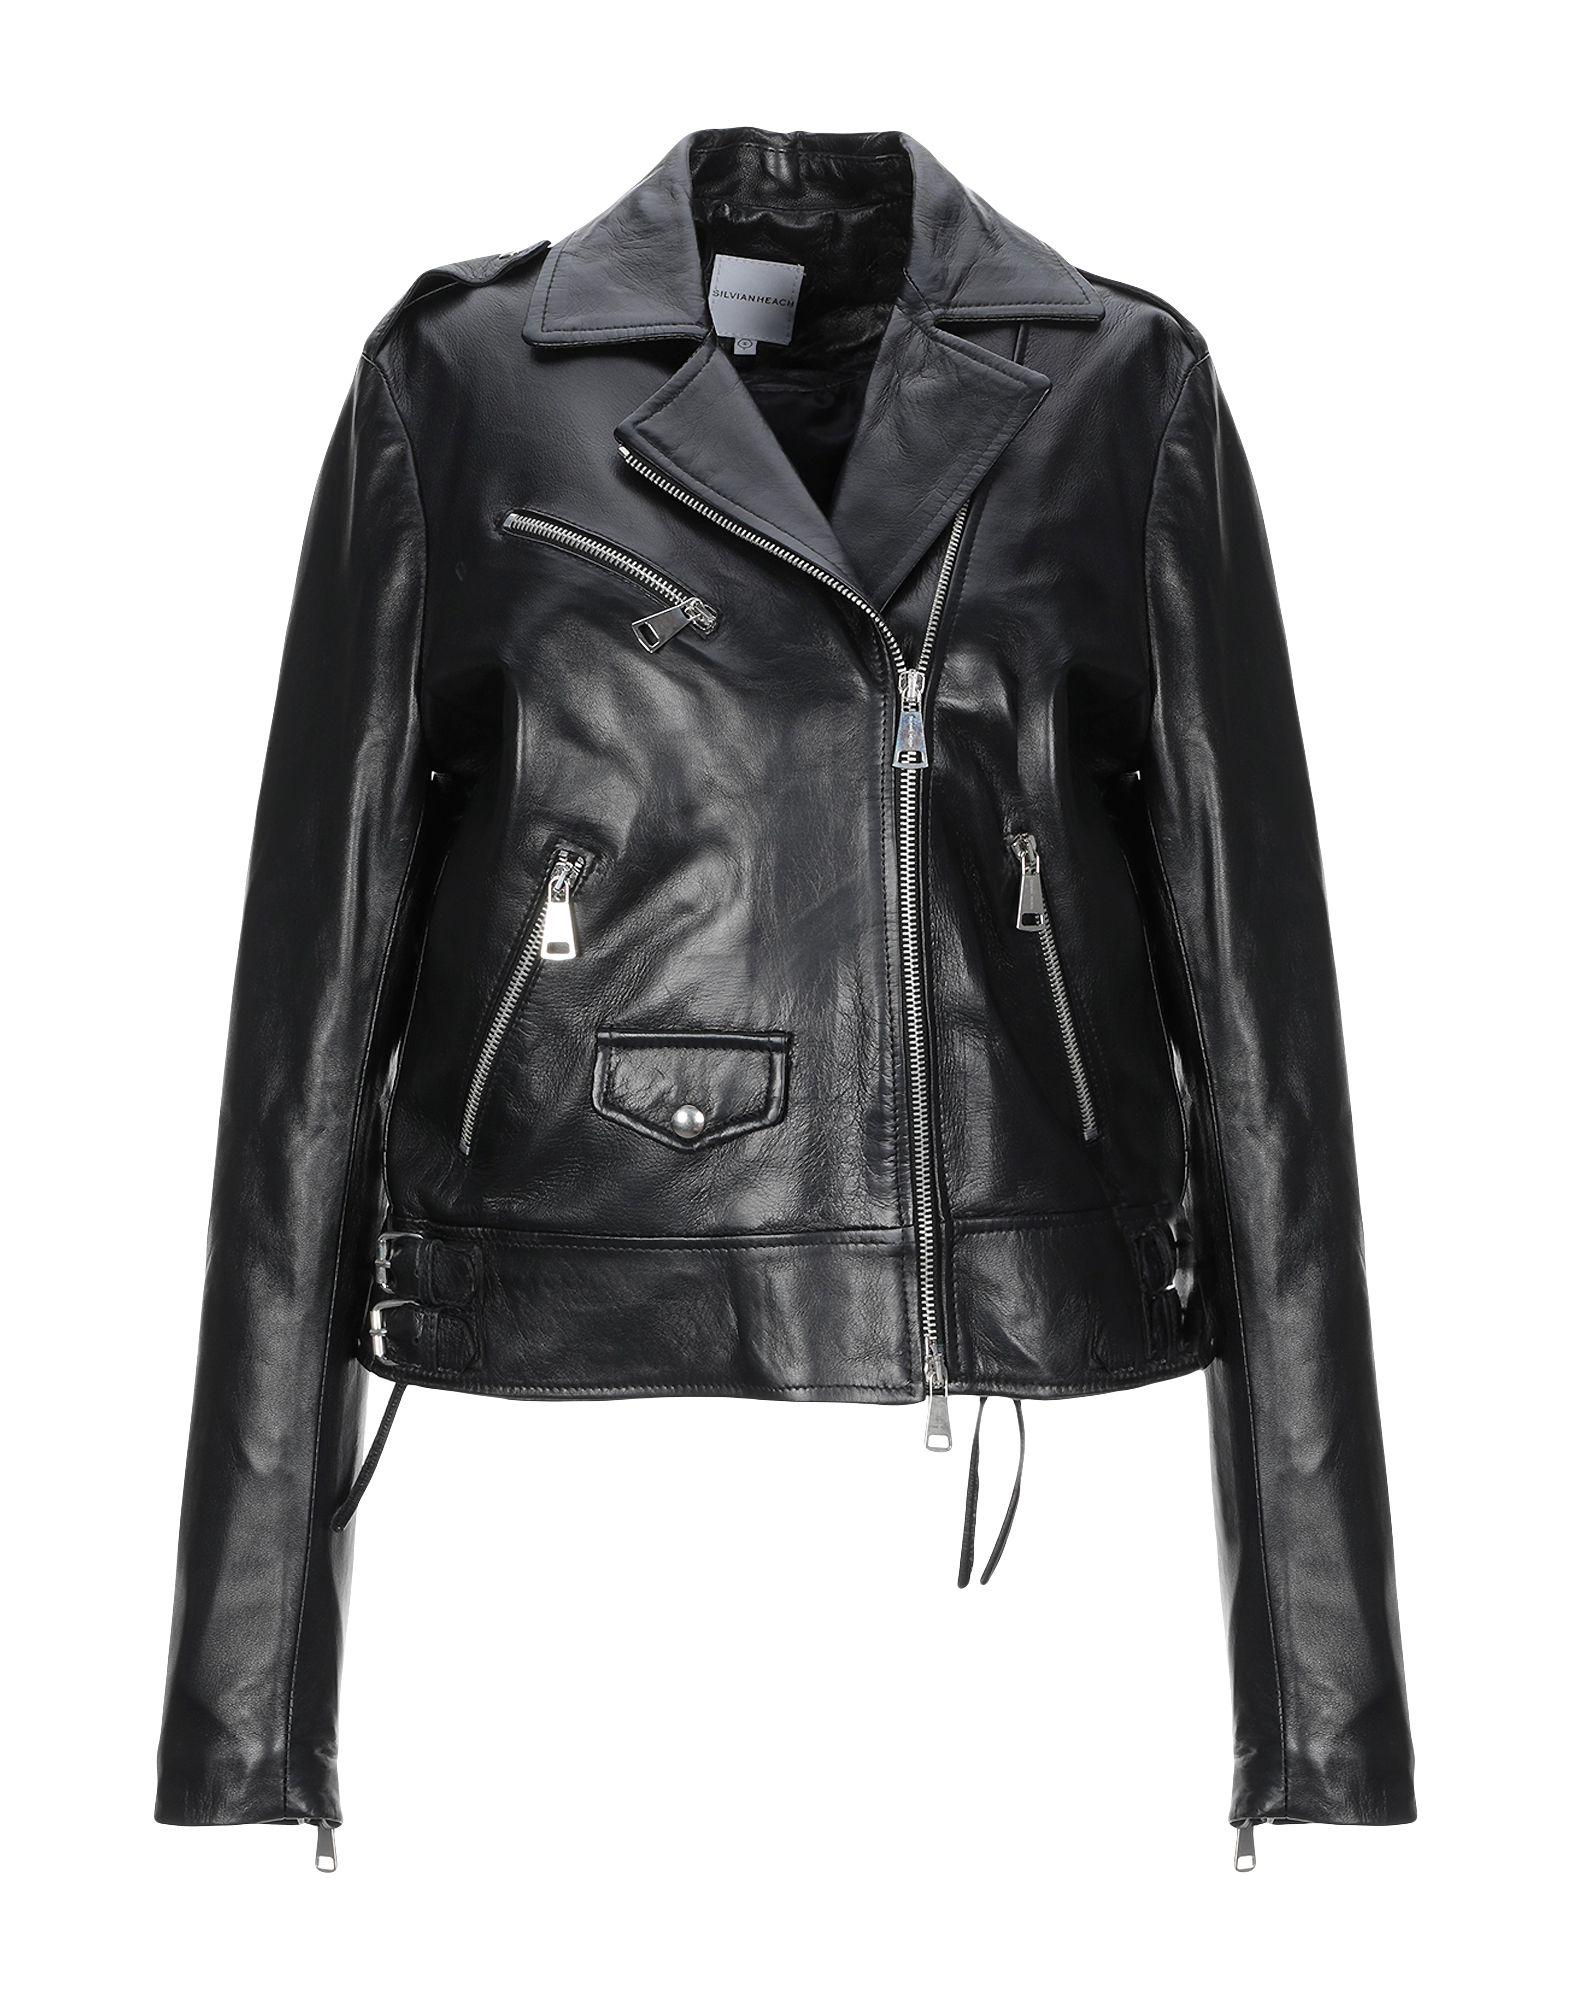 Silvian Heach Leather Jacket in Black - Lyst